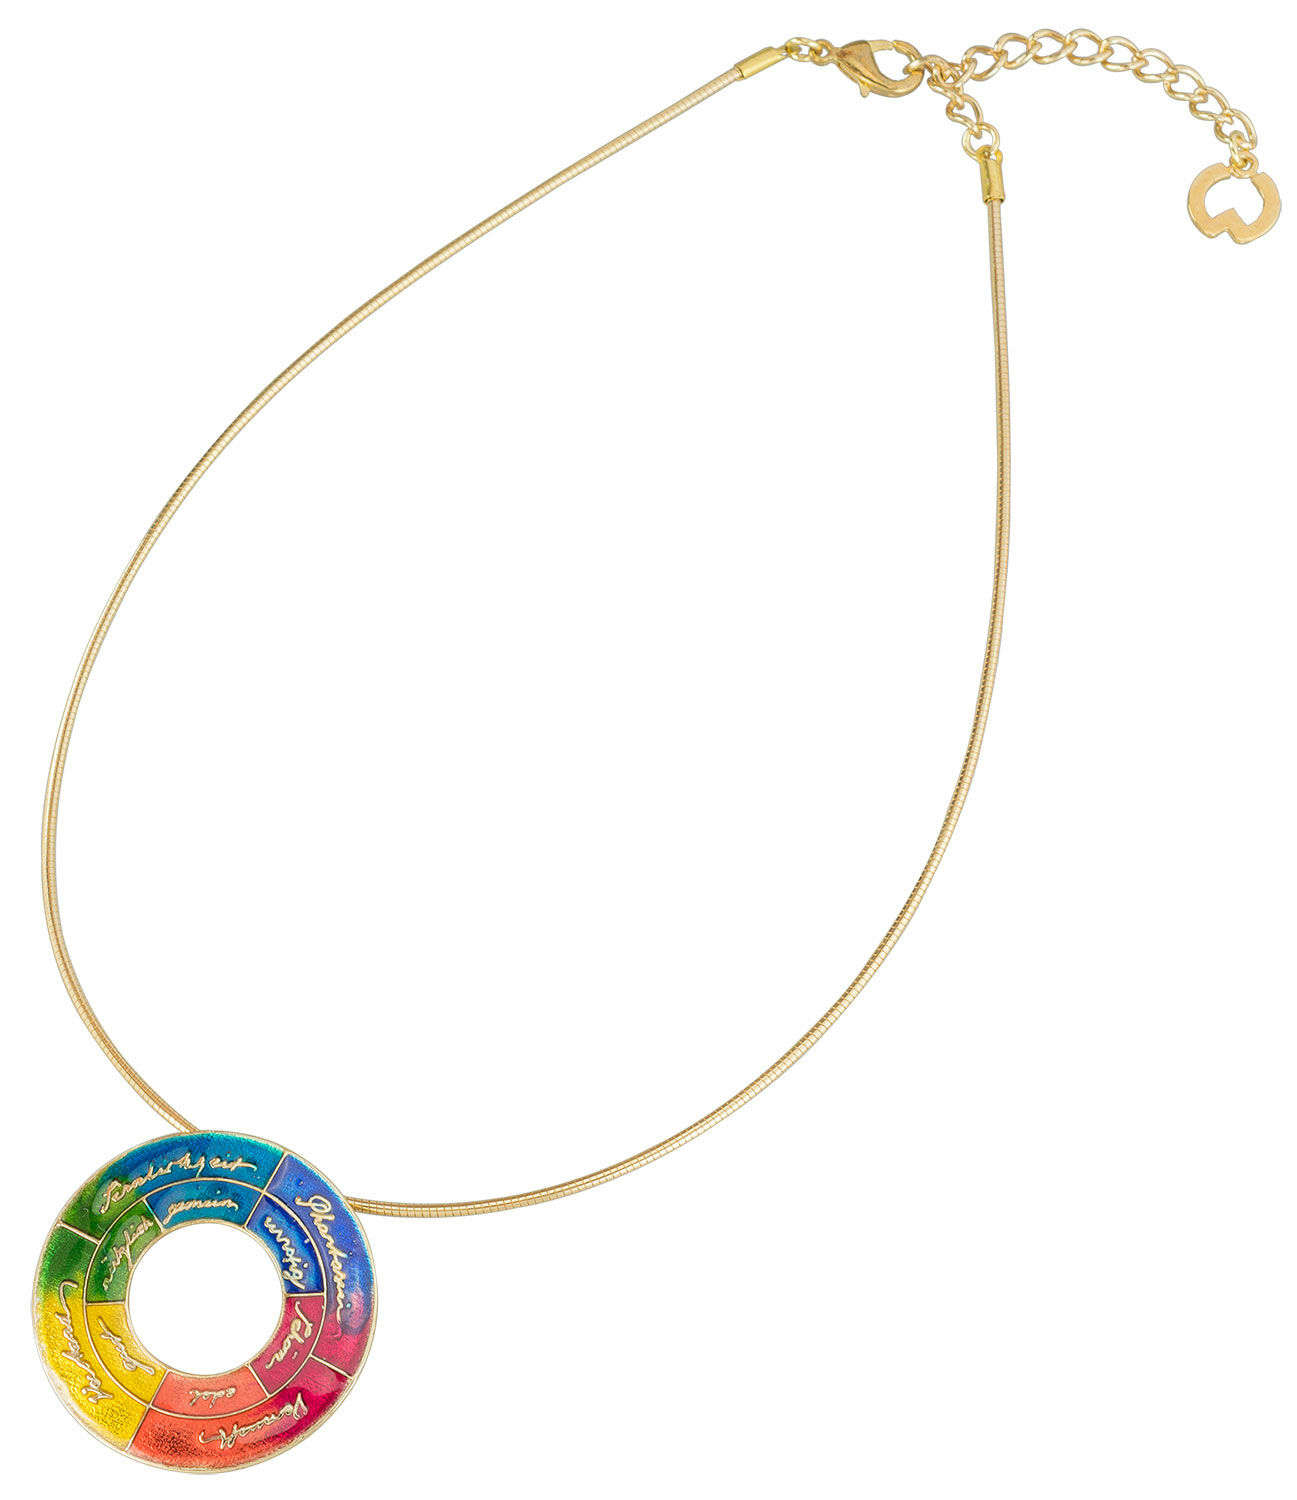 Necklace "Goethe's Colour Circle" by Petra Waszak